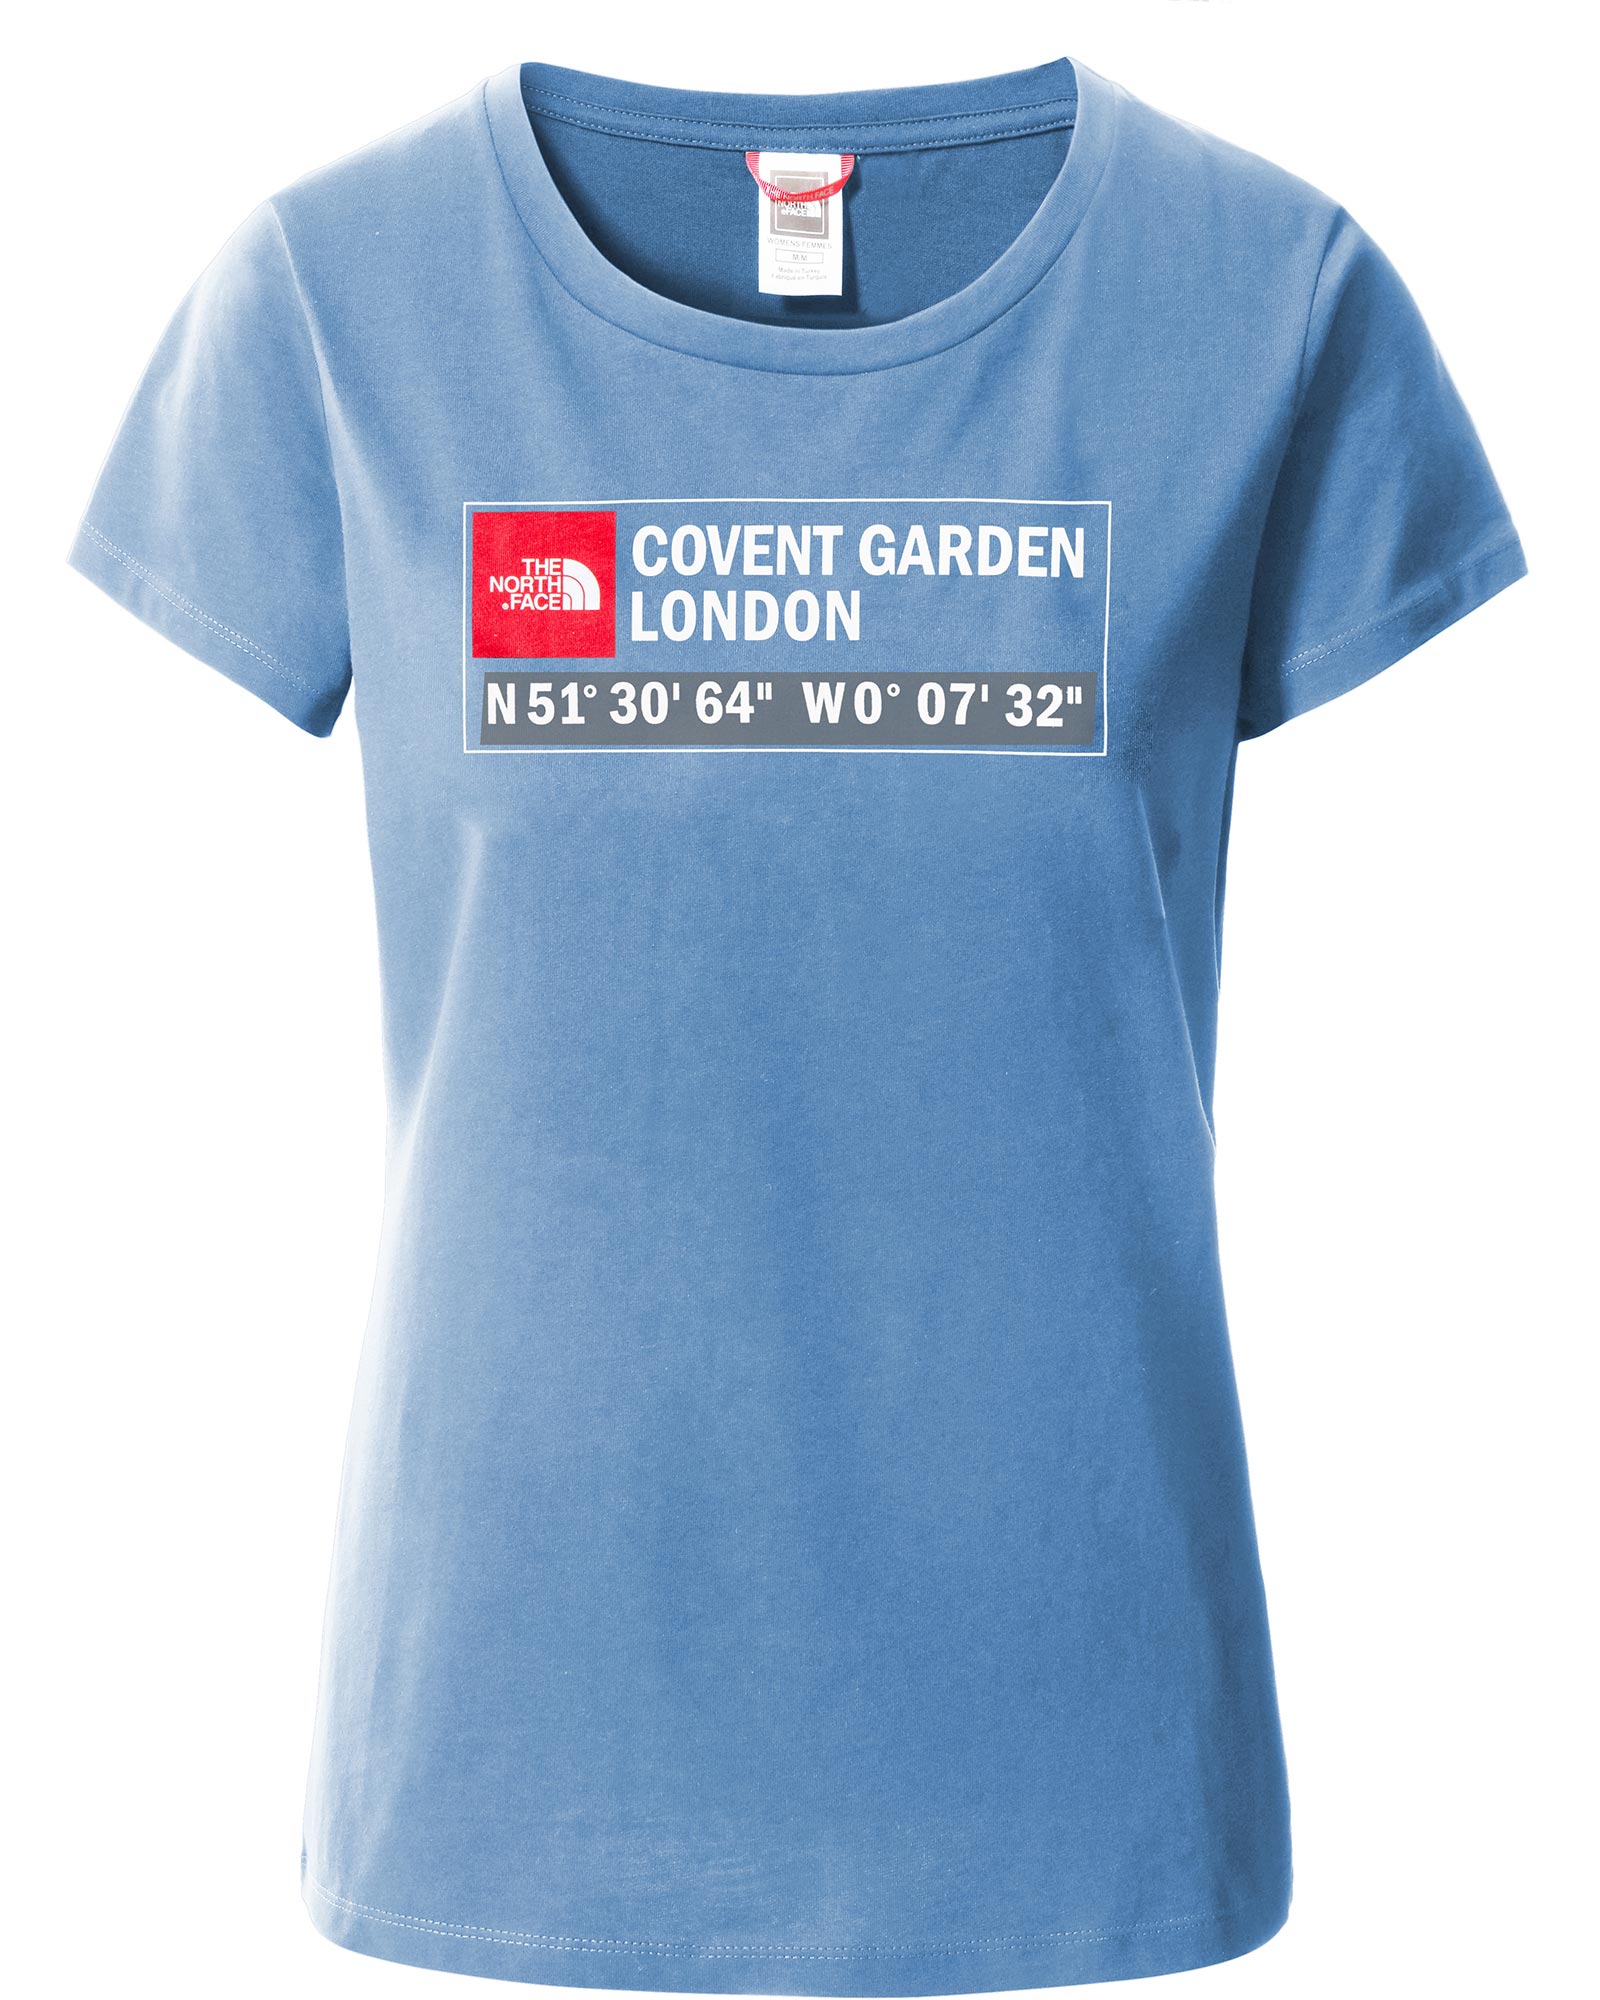 The North Face Covent Garden GPS Logo Women’s T Shirt - Vintage Blue L